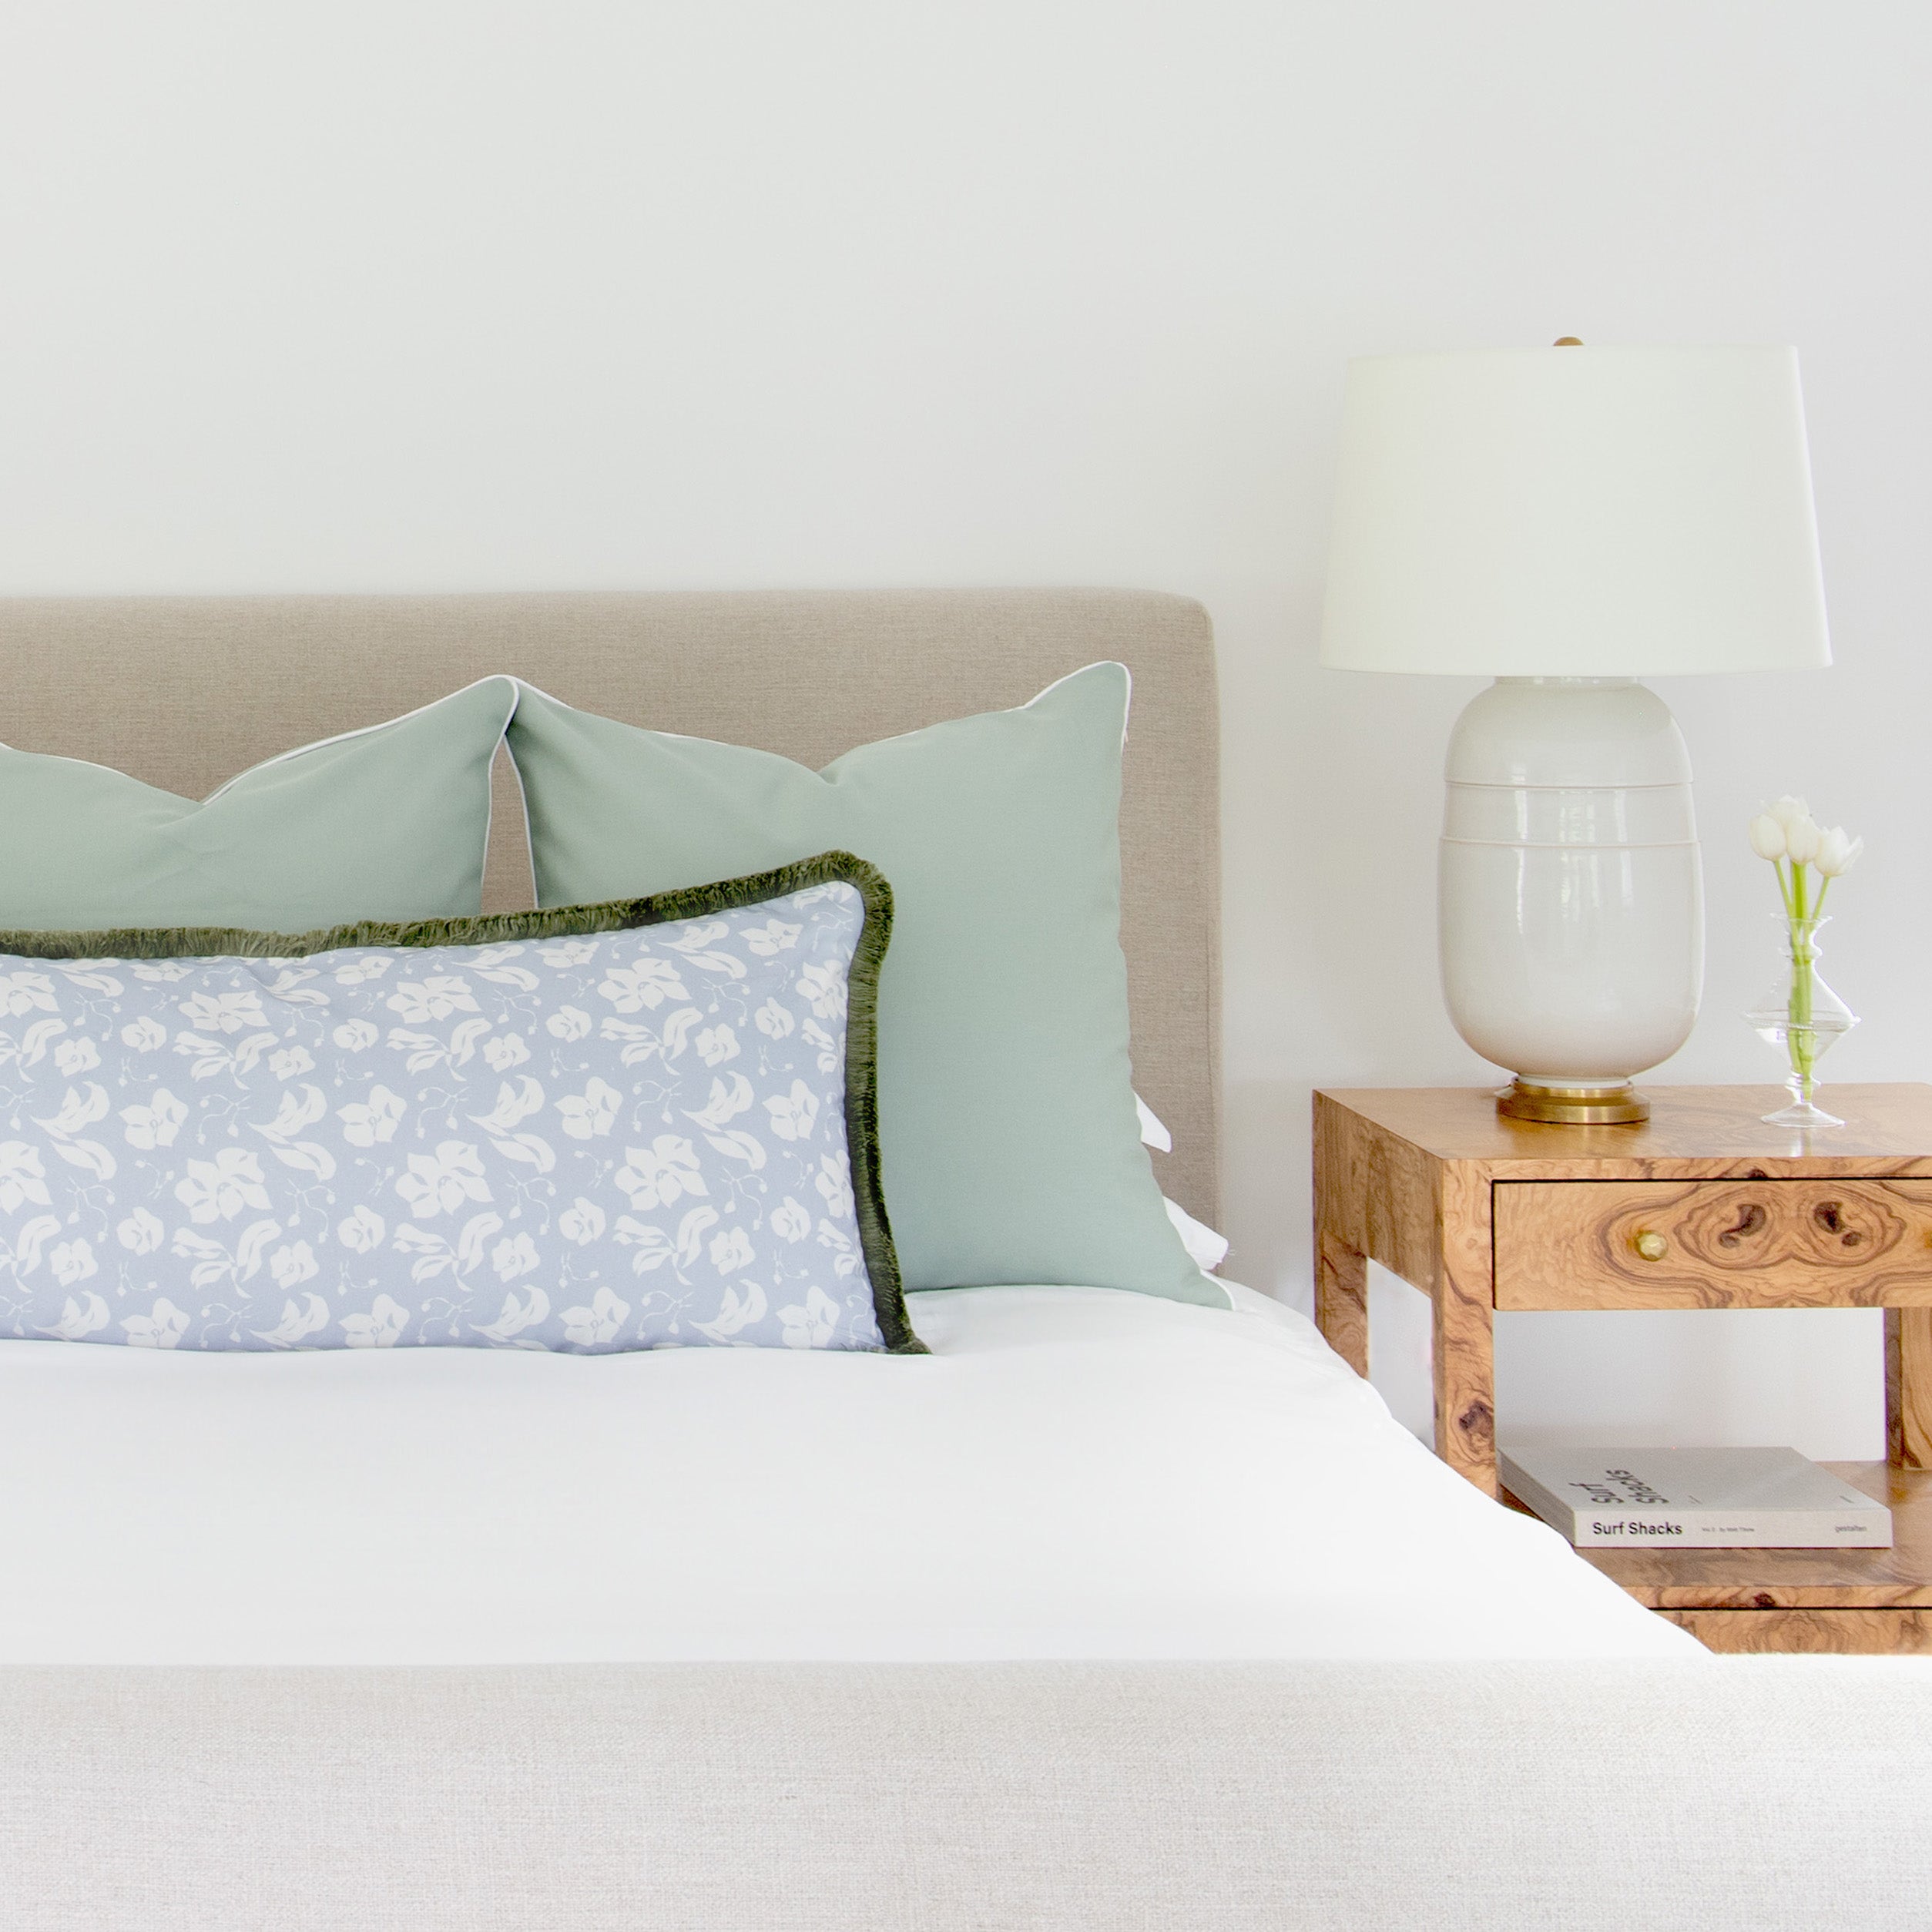 Porche & Co. :: Bedroom Throw Pillow Size Guide — Porche & Co.